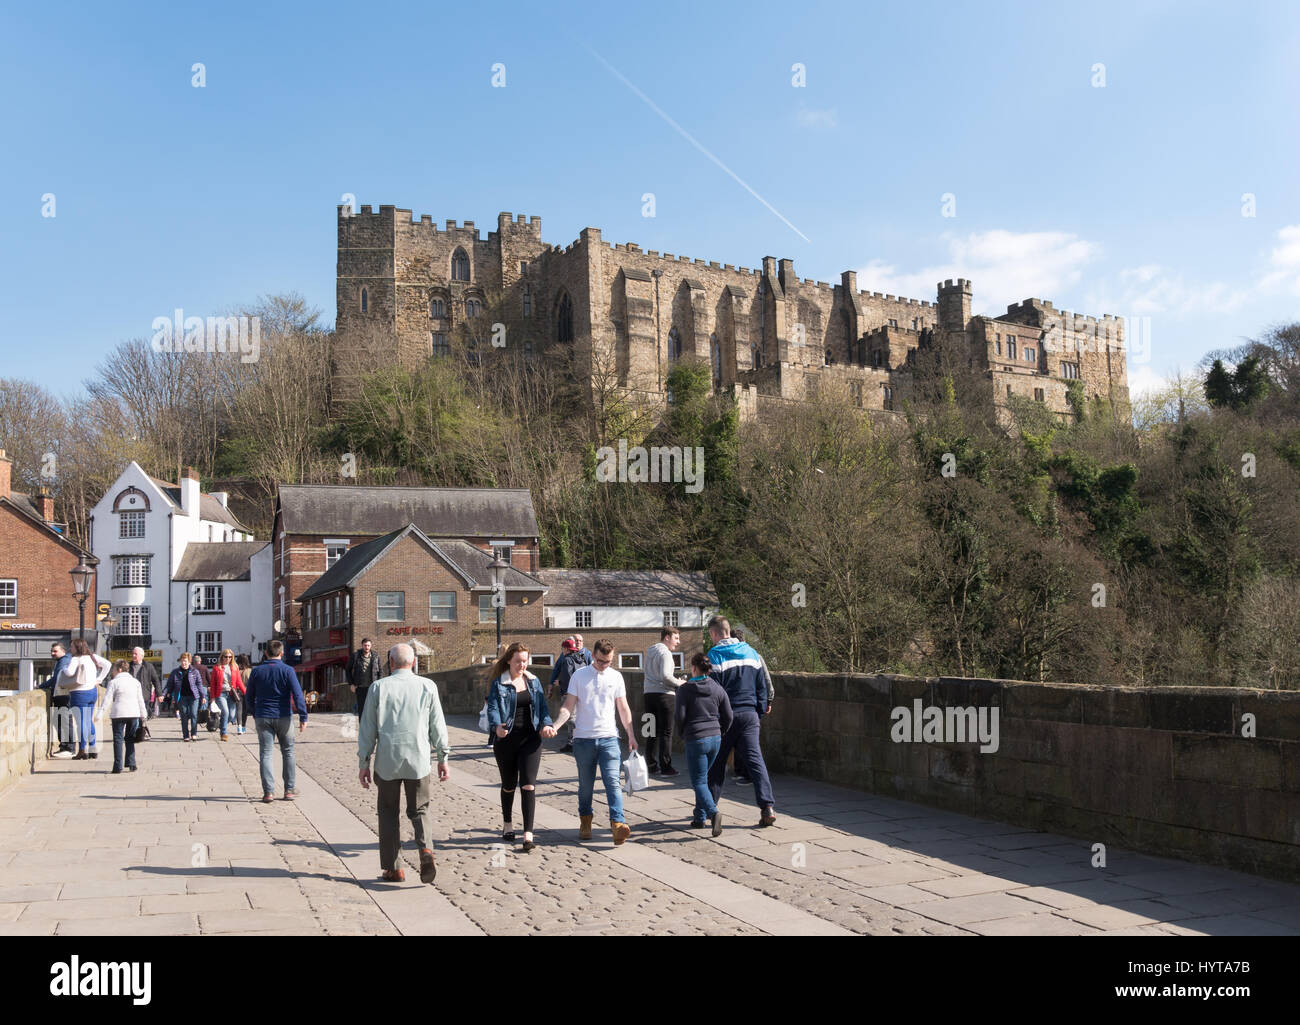 People crossing Framwellgate bridge with Durham castle in the background, England, UK Stock Photo